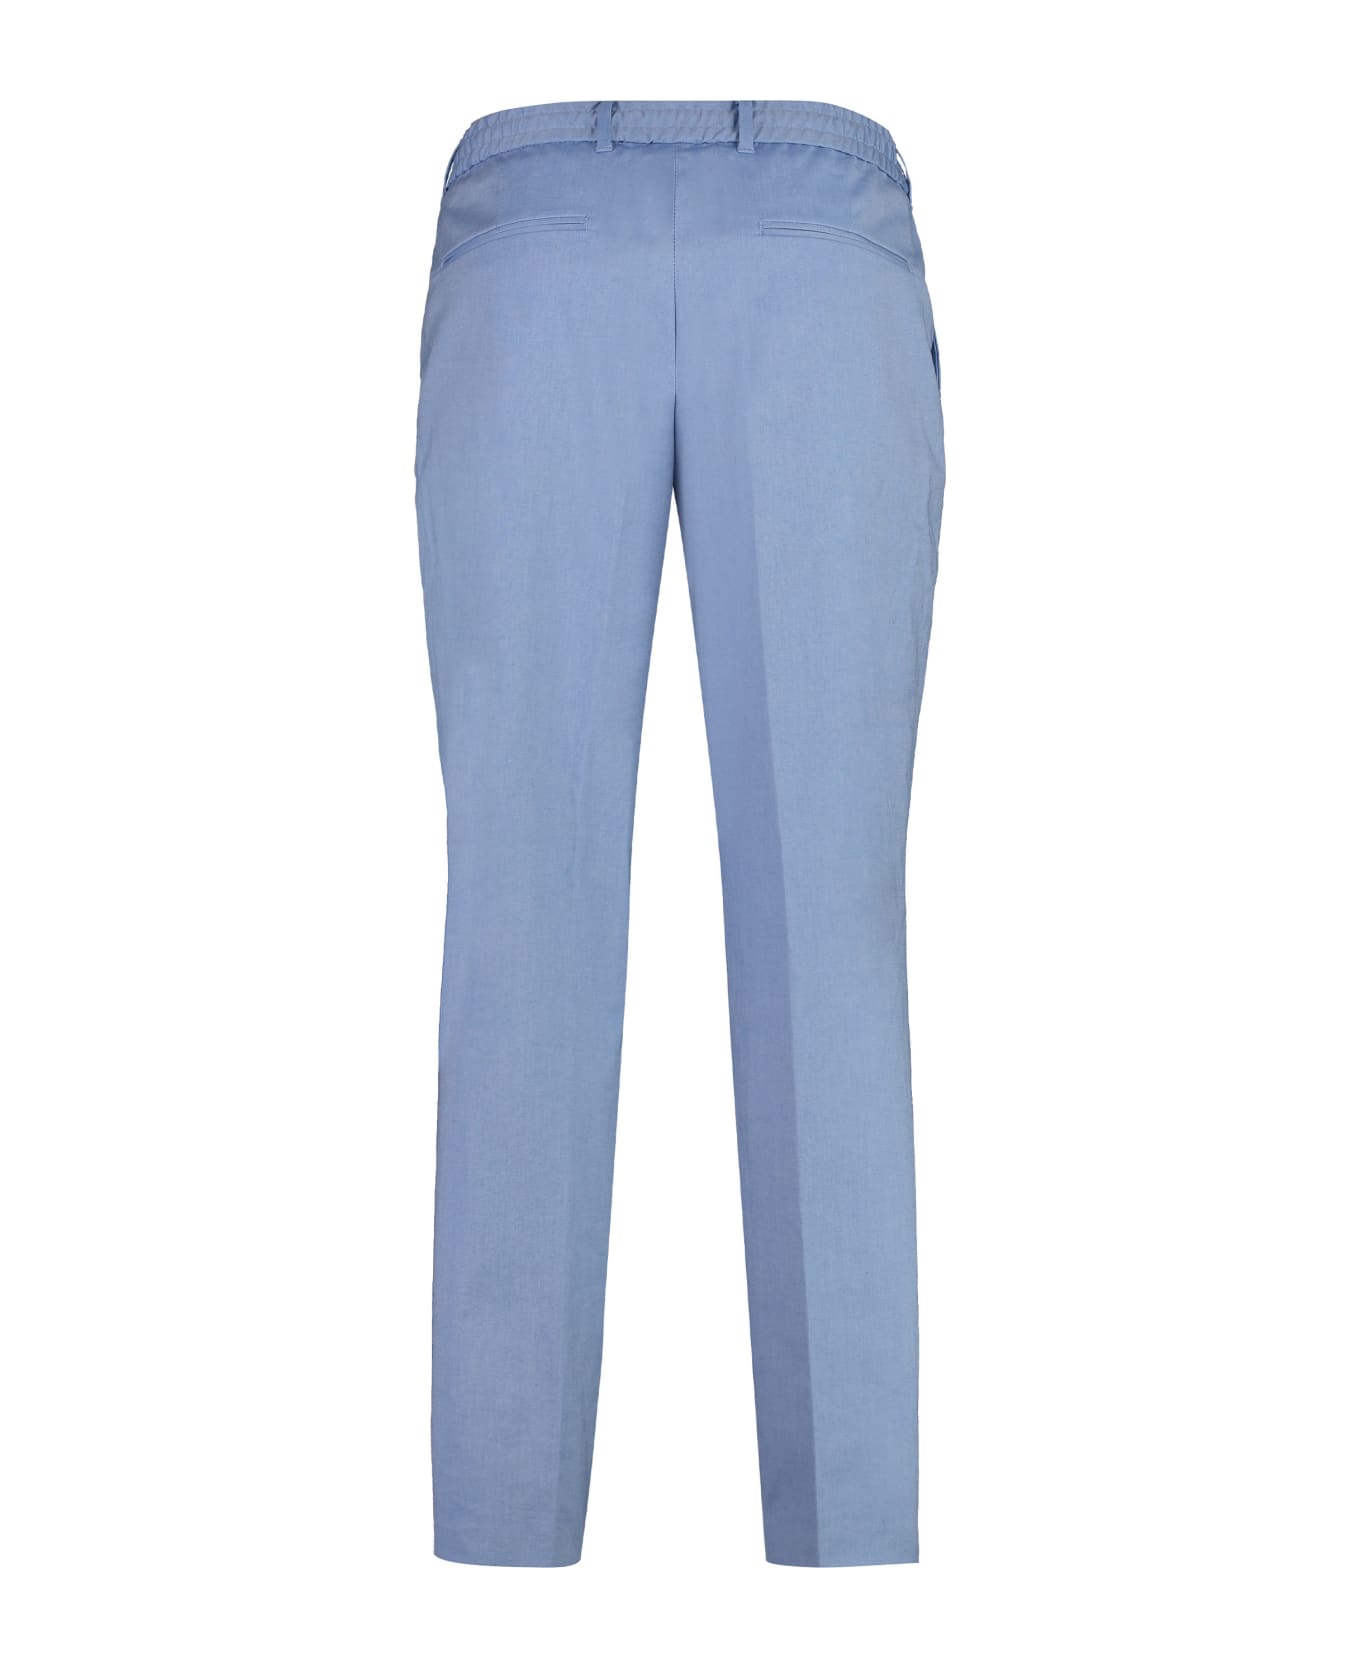 Hugo Boss Cotton Trousers - Light Blue